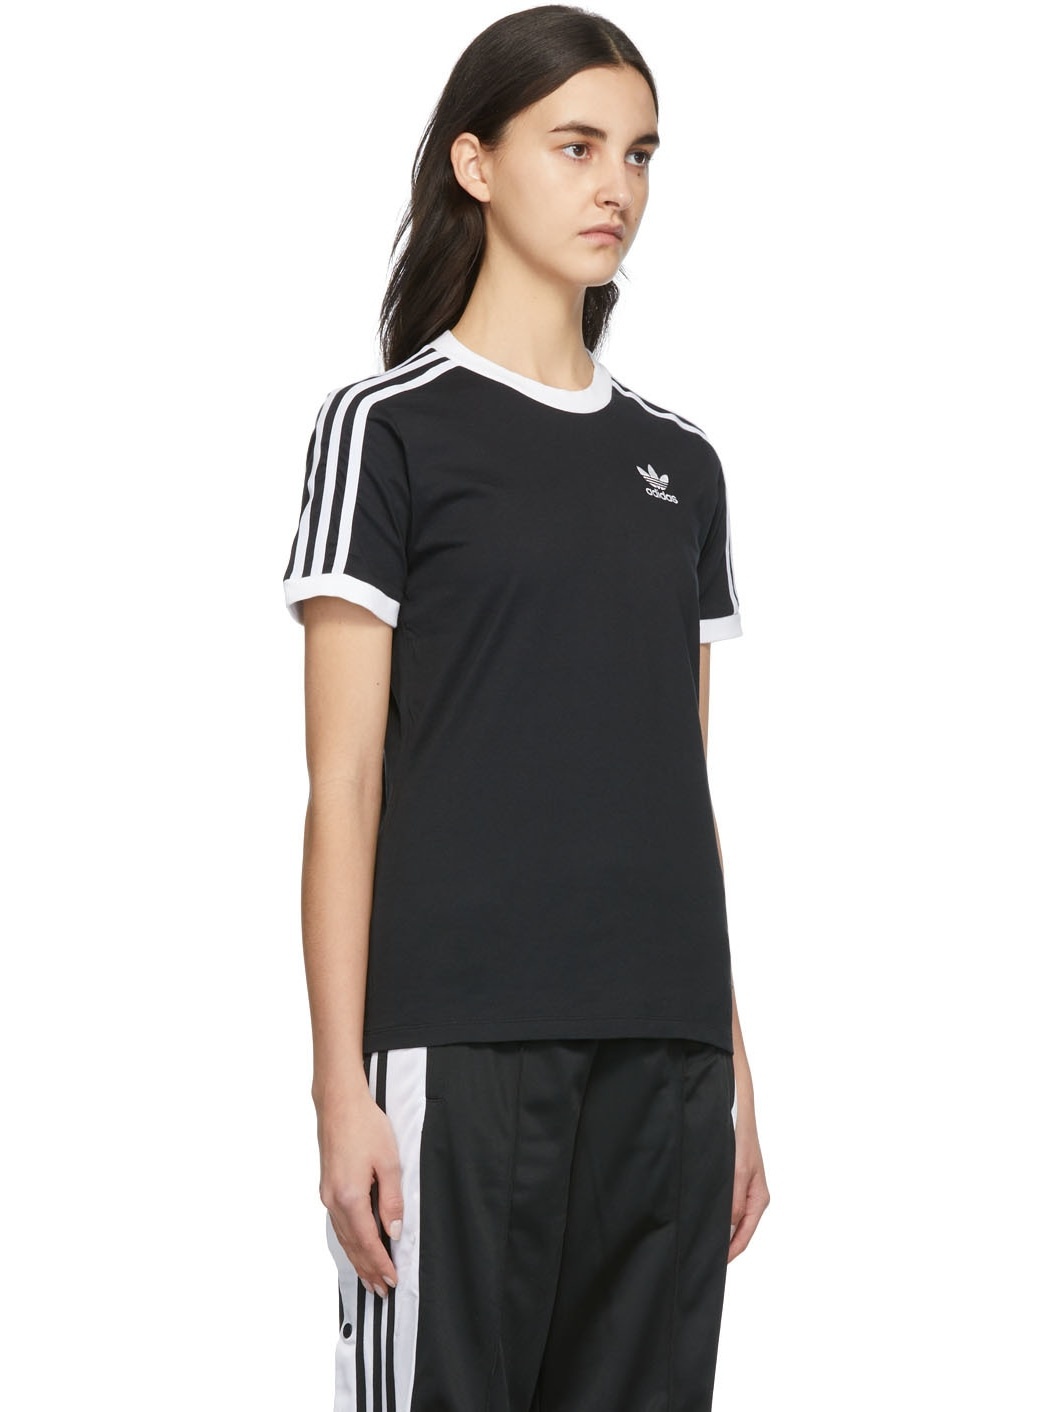 Black Adicolor 3 Stripes T-Shirt - 2